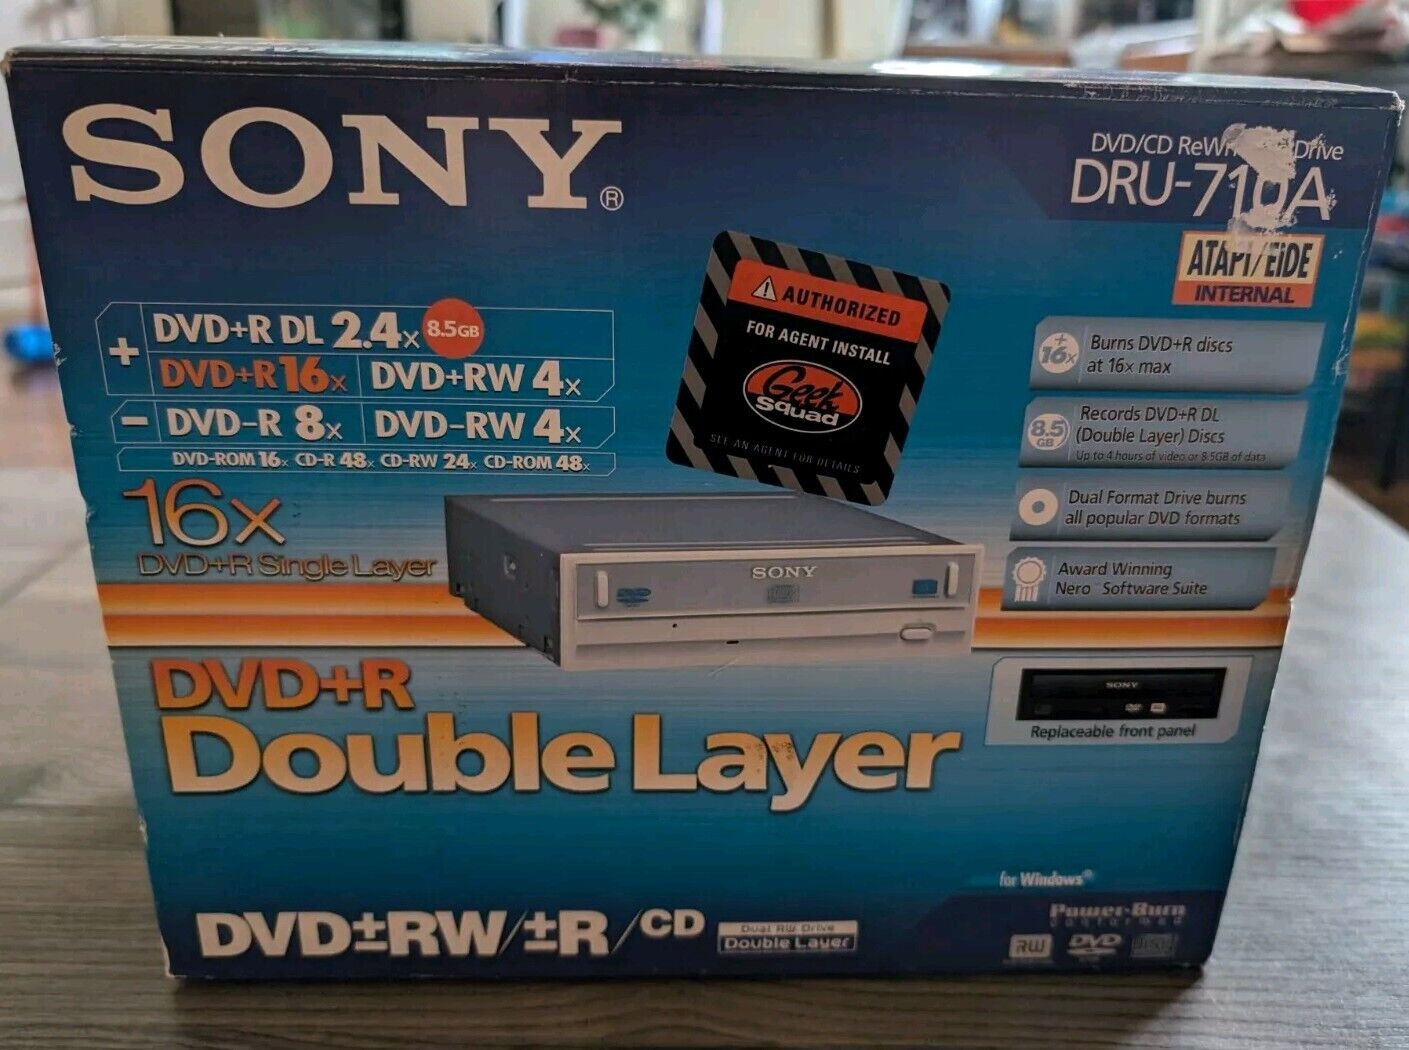 SONY DVD/CD ReWritable Drive DRU-710A DVD+R Double Layer New Open Box